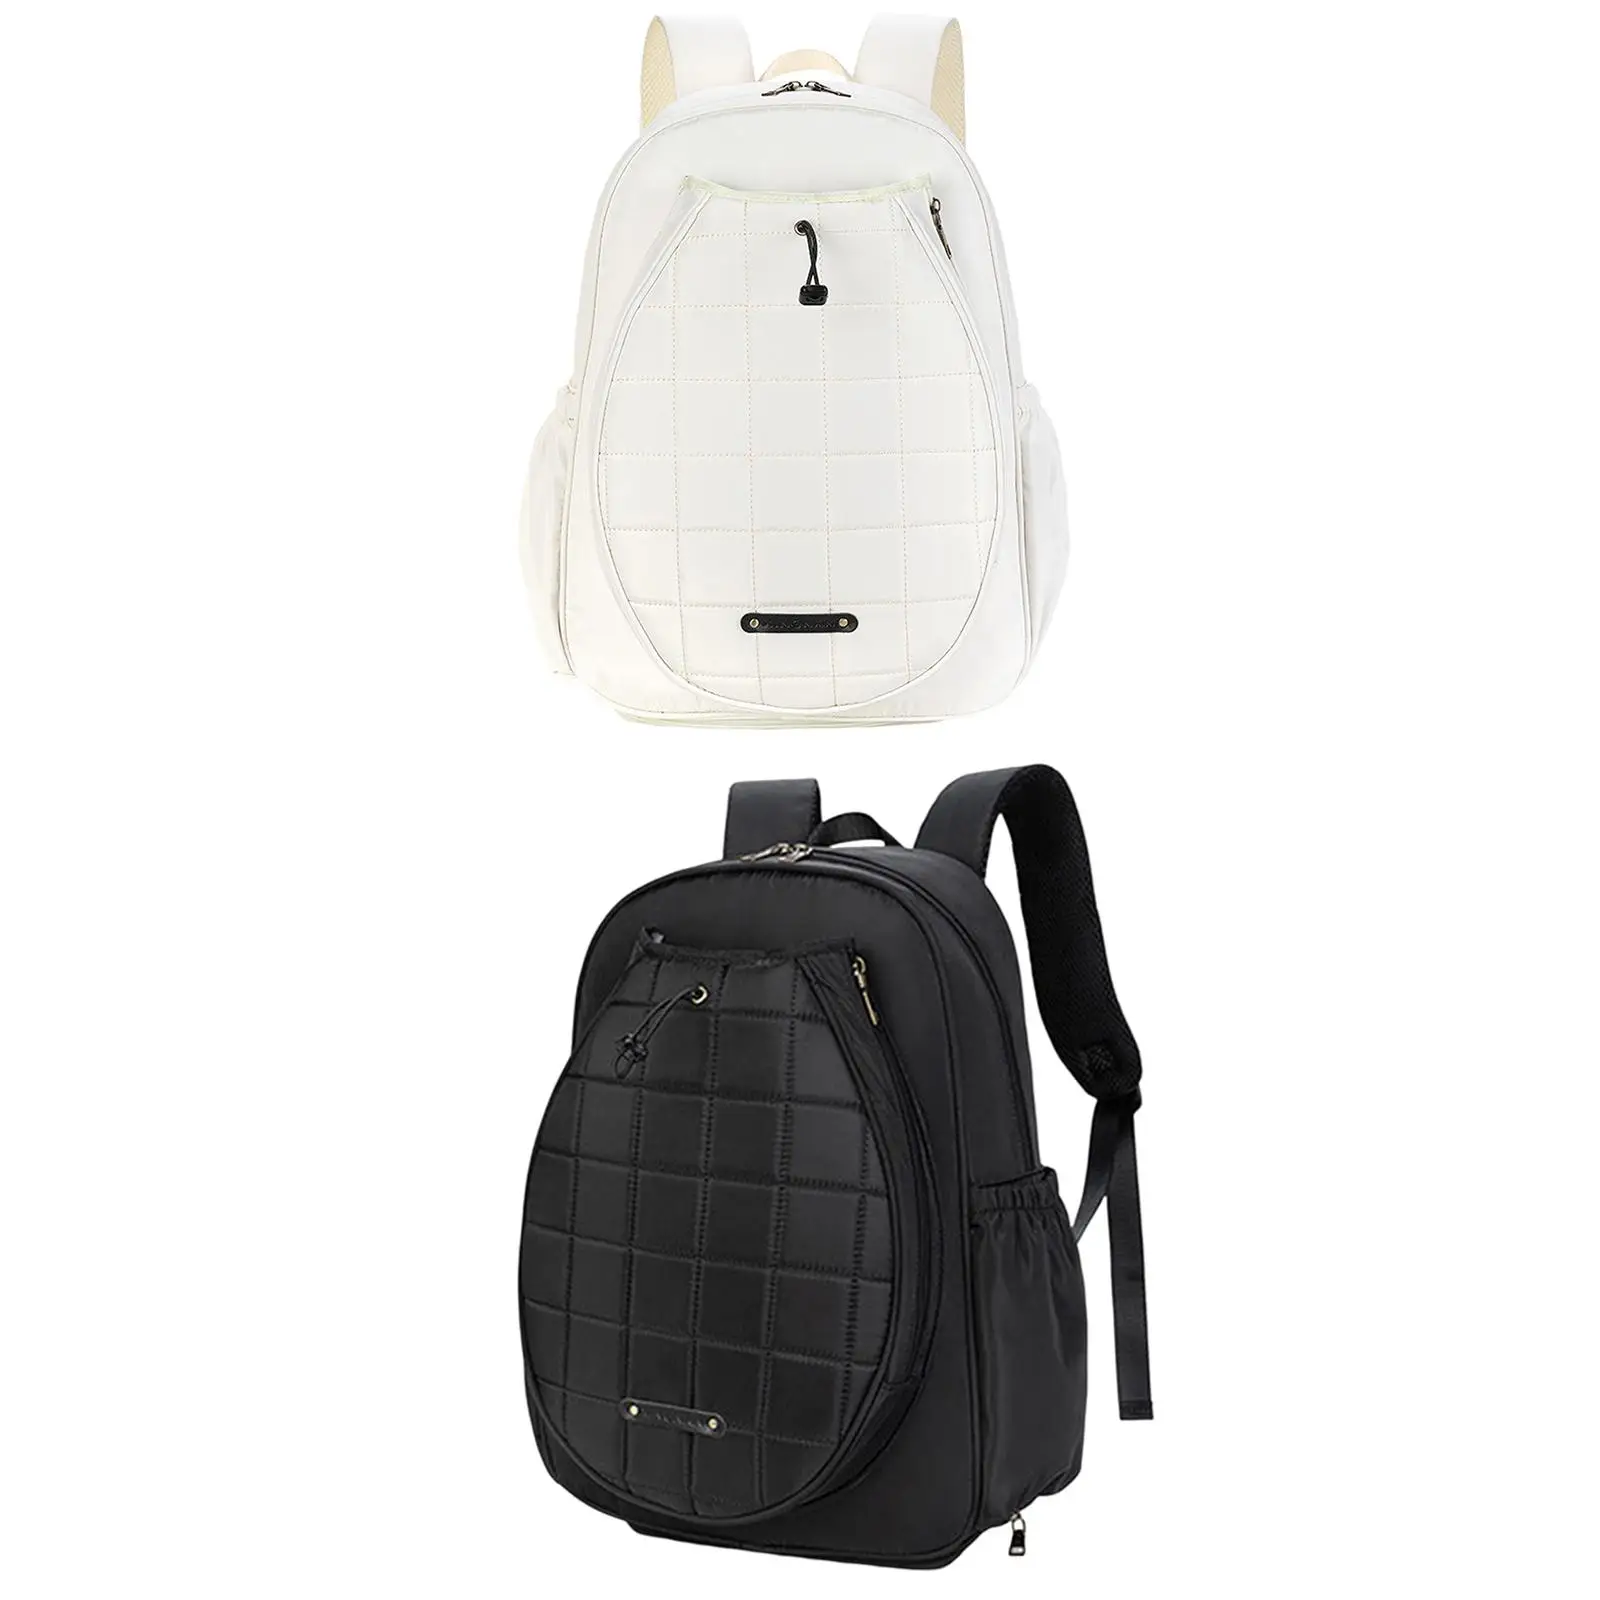 Tennis Backpack Tennis Bag Multifunctional Sport Bag Racquet Carrying Bag Tennis Racket Bag for Tennis Racket Balls Accessories